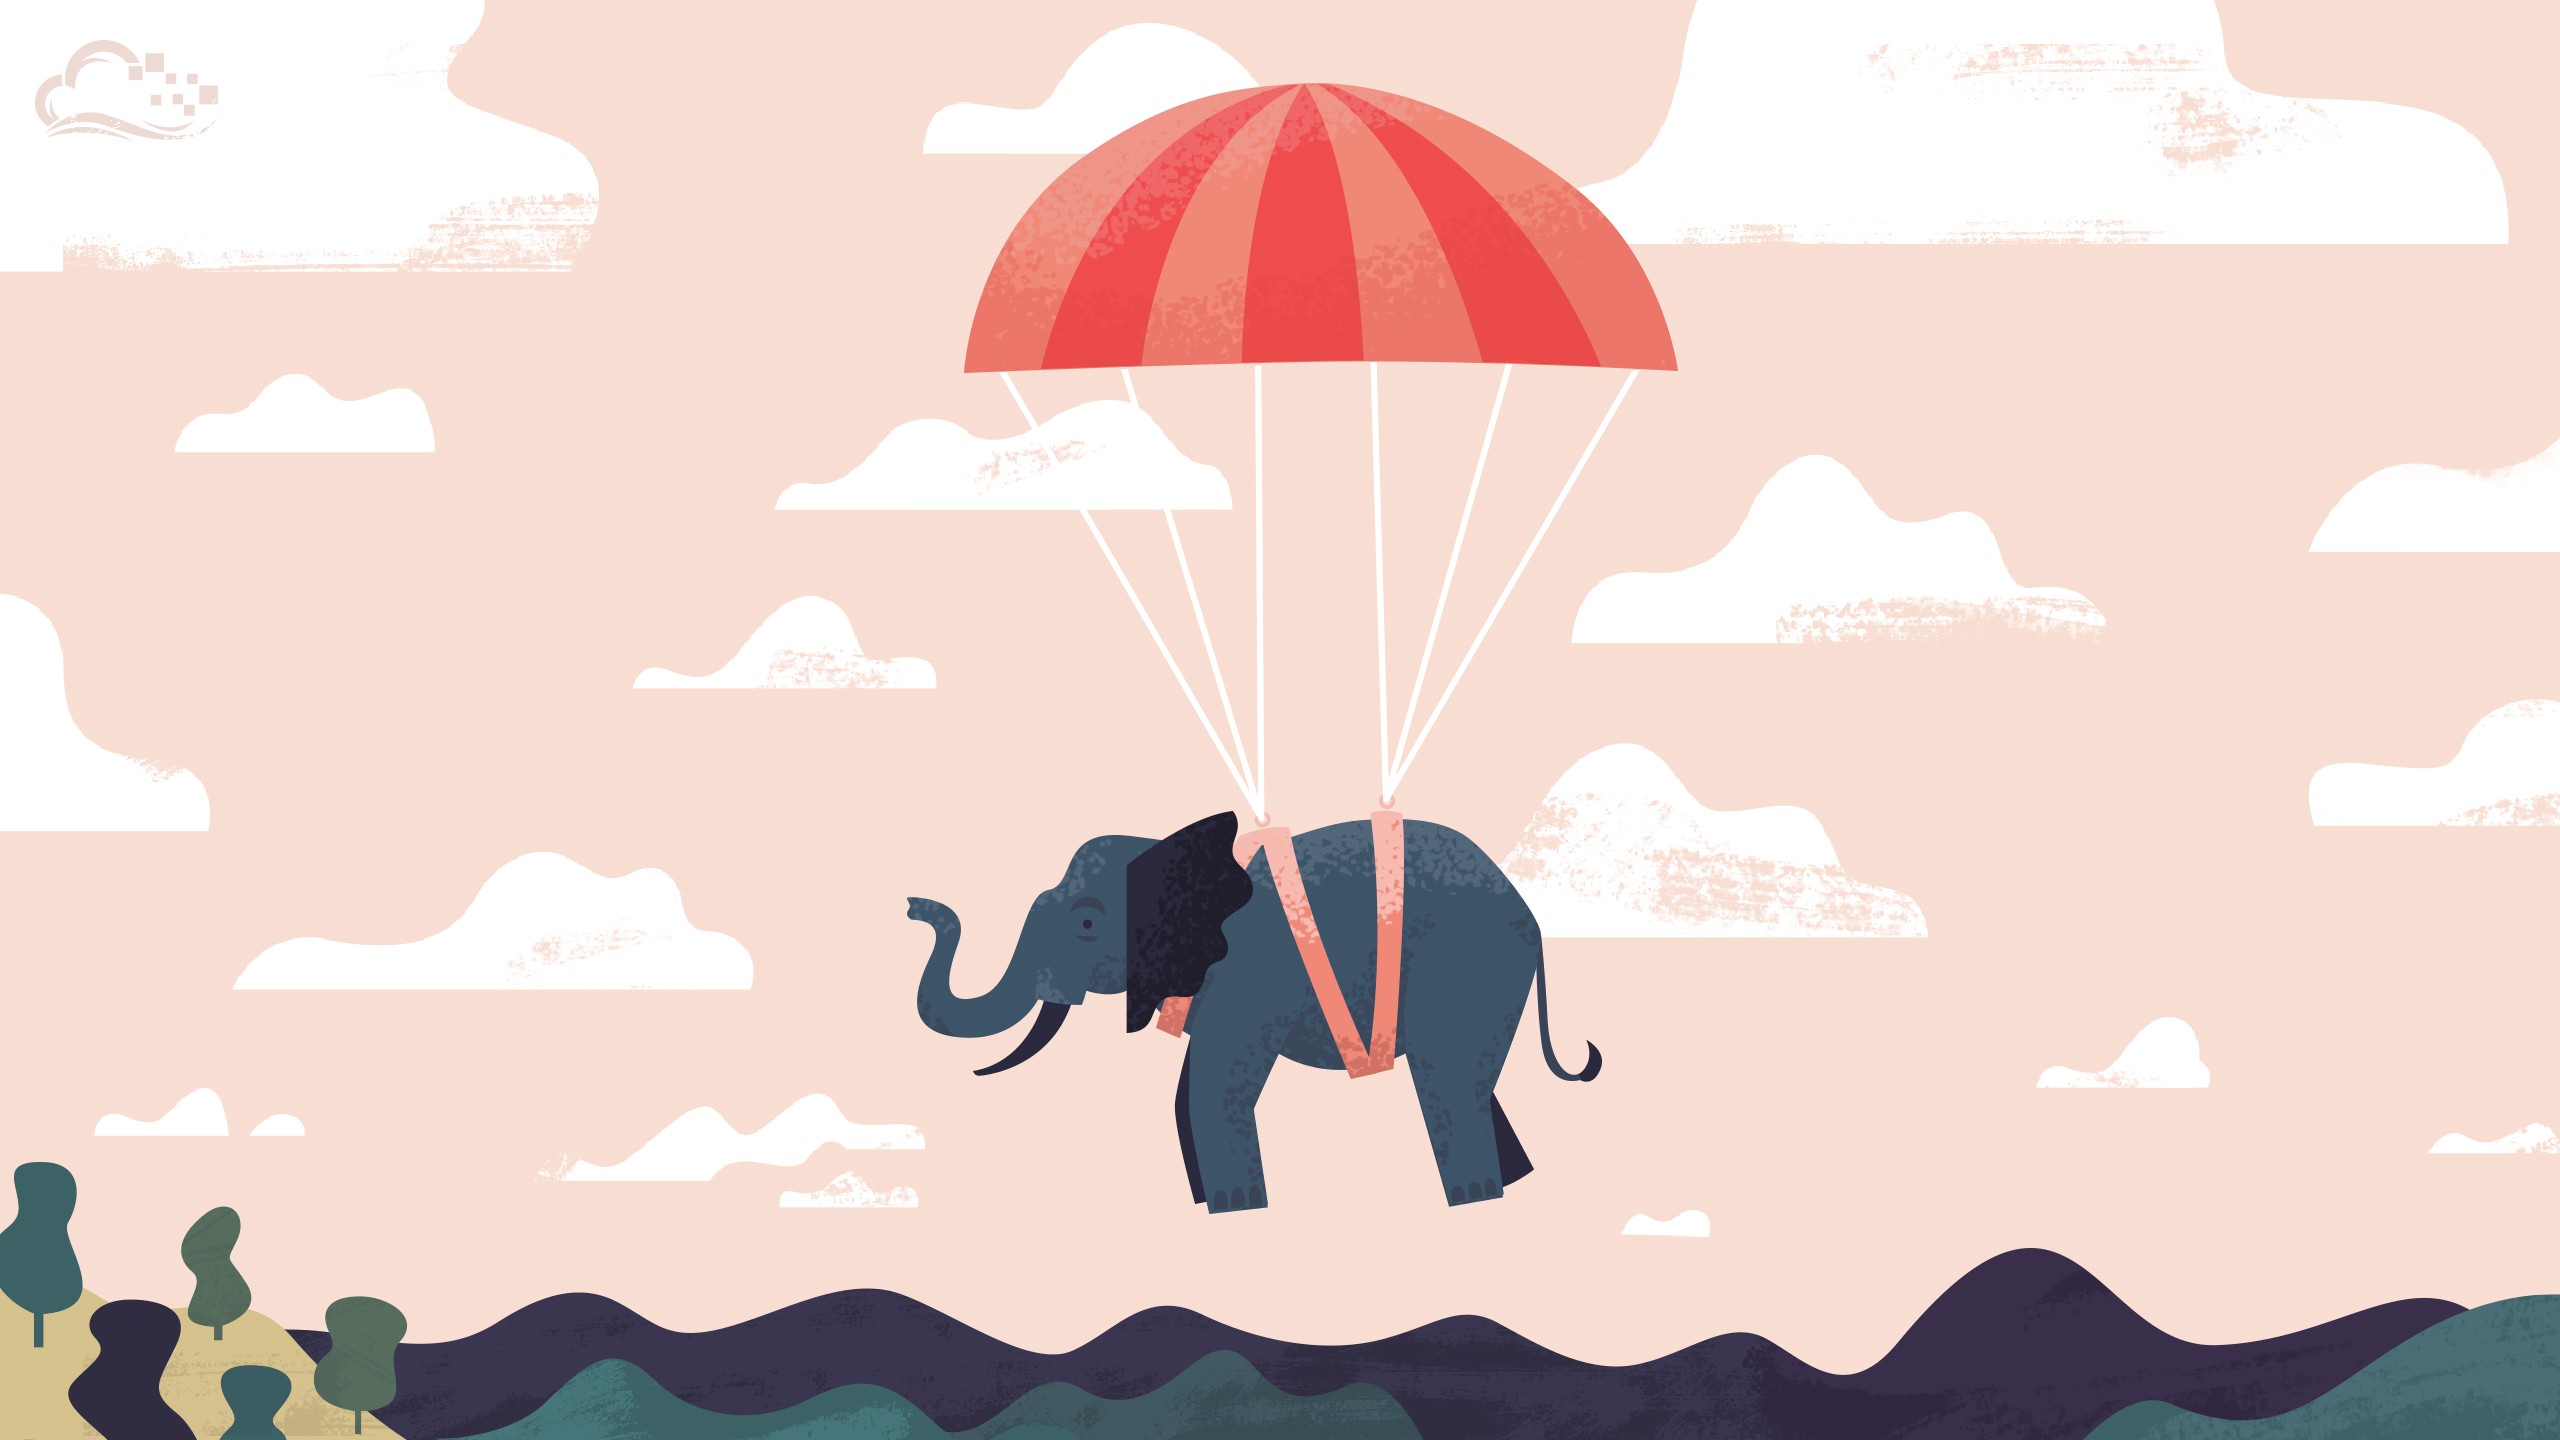 General 2560x1440 digitalocean elephant minimalism Africa parachutes digital art